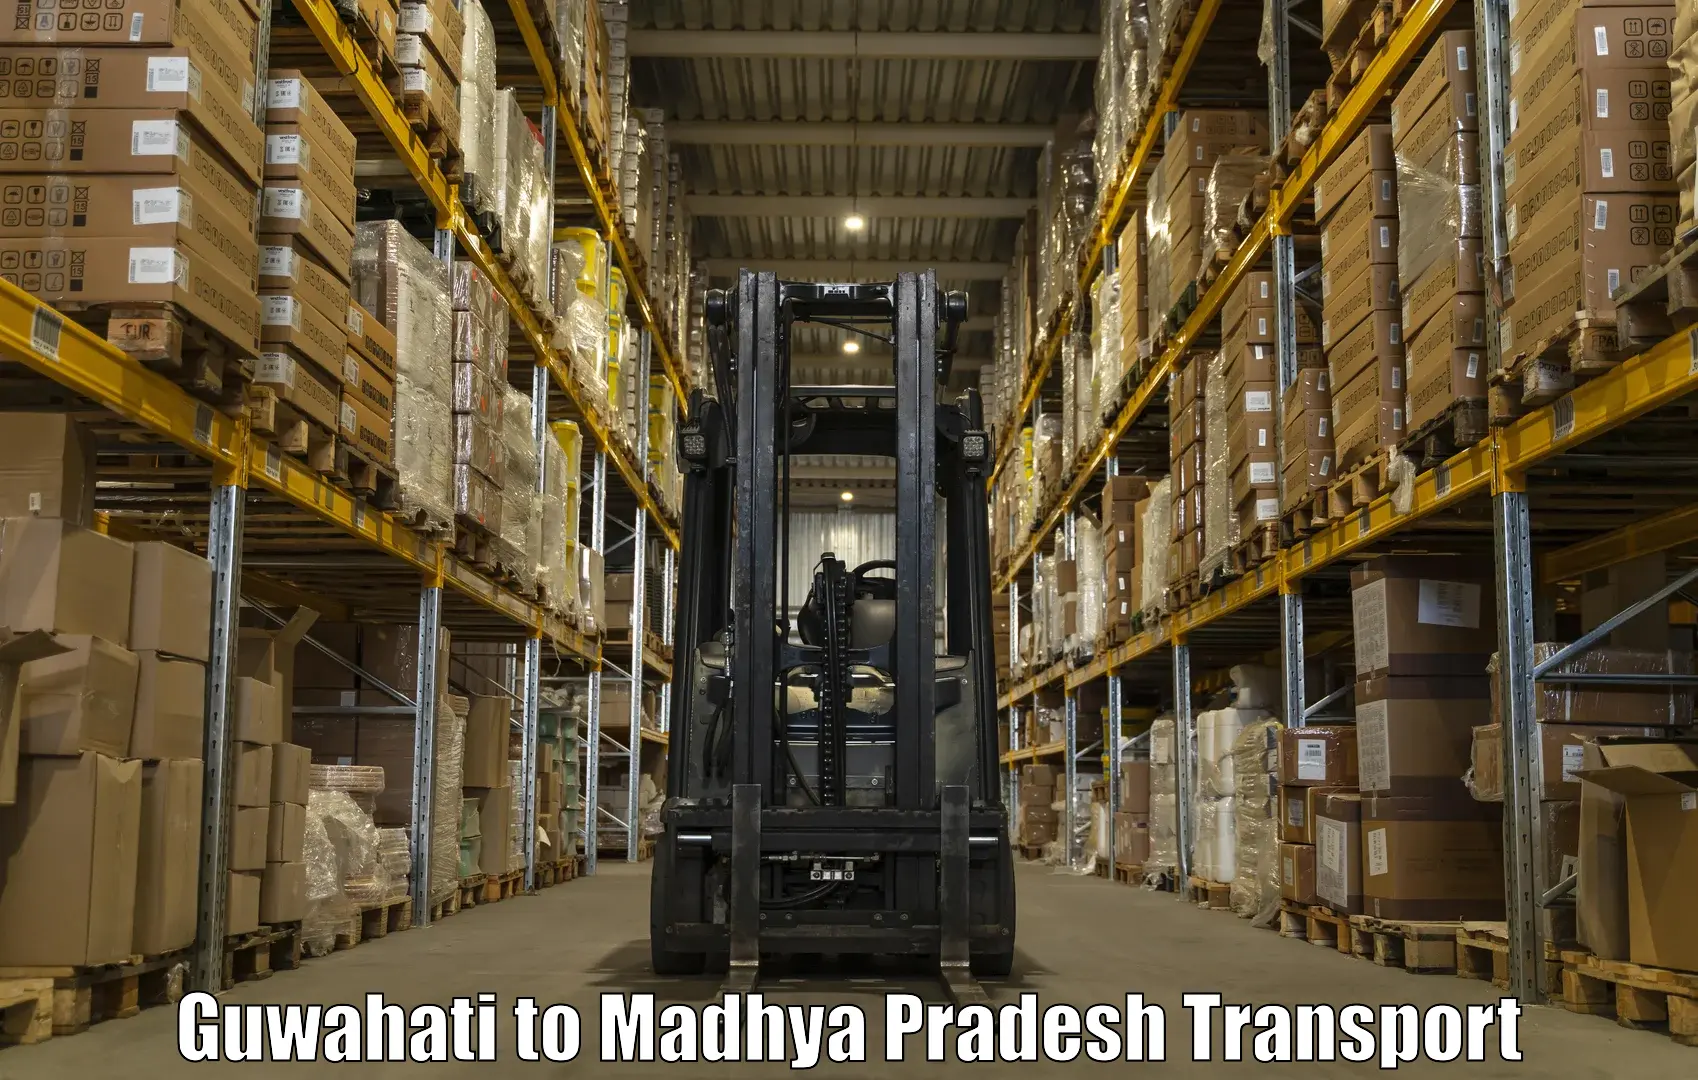 Truck transport companies in India Guwahati to Bhanpura